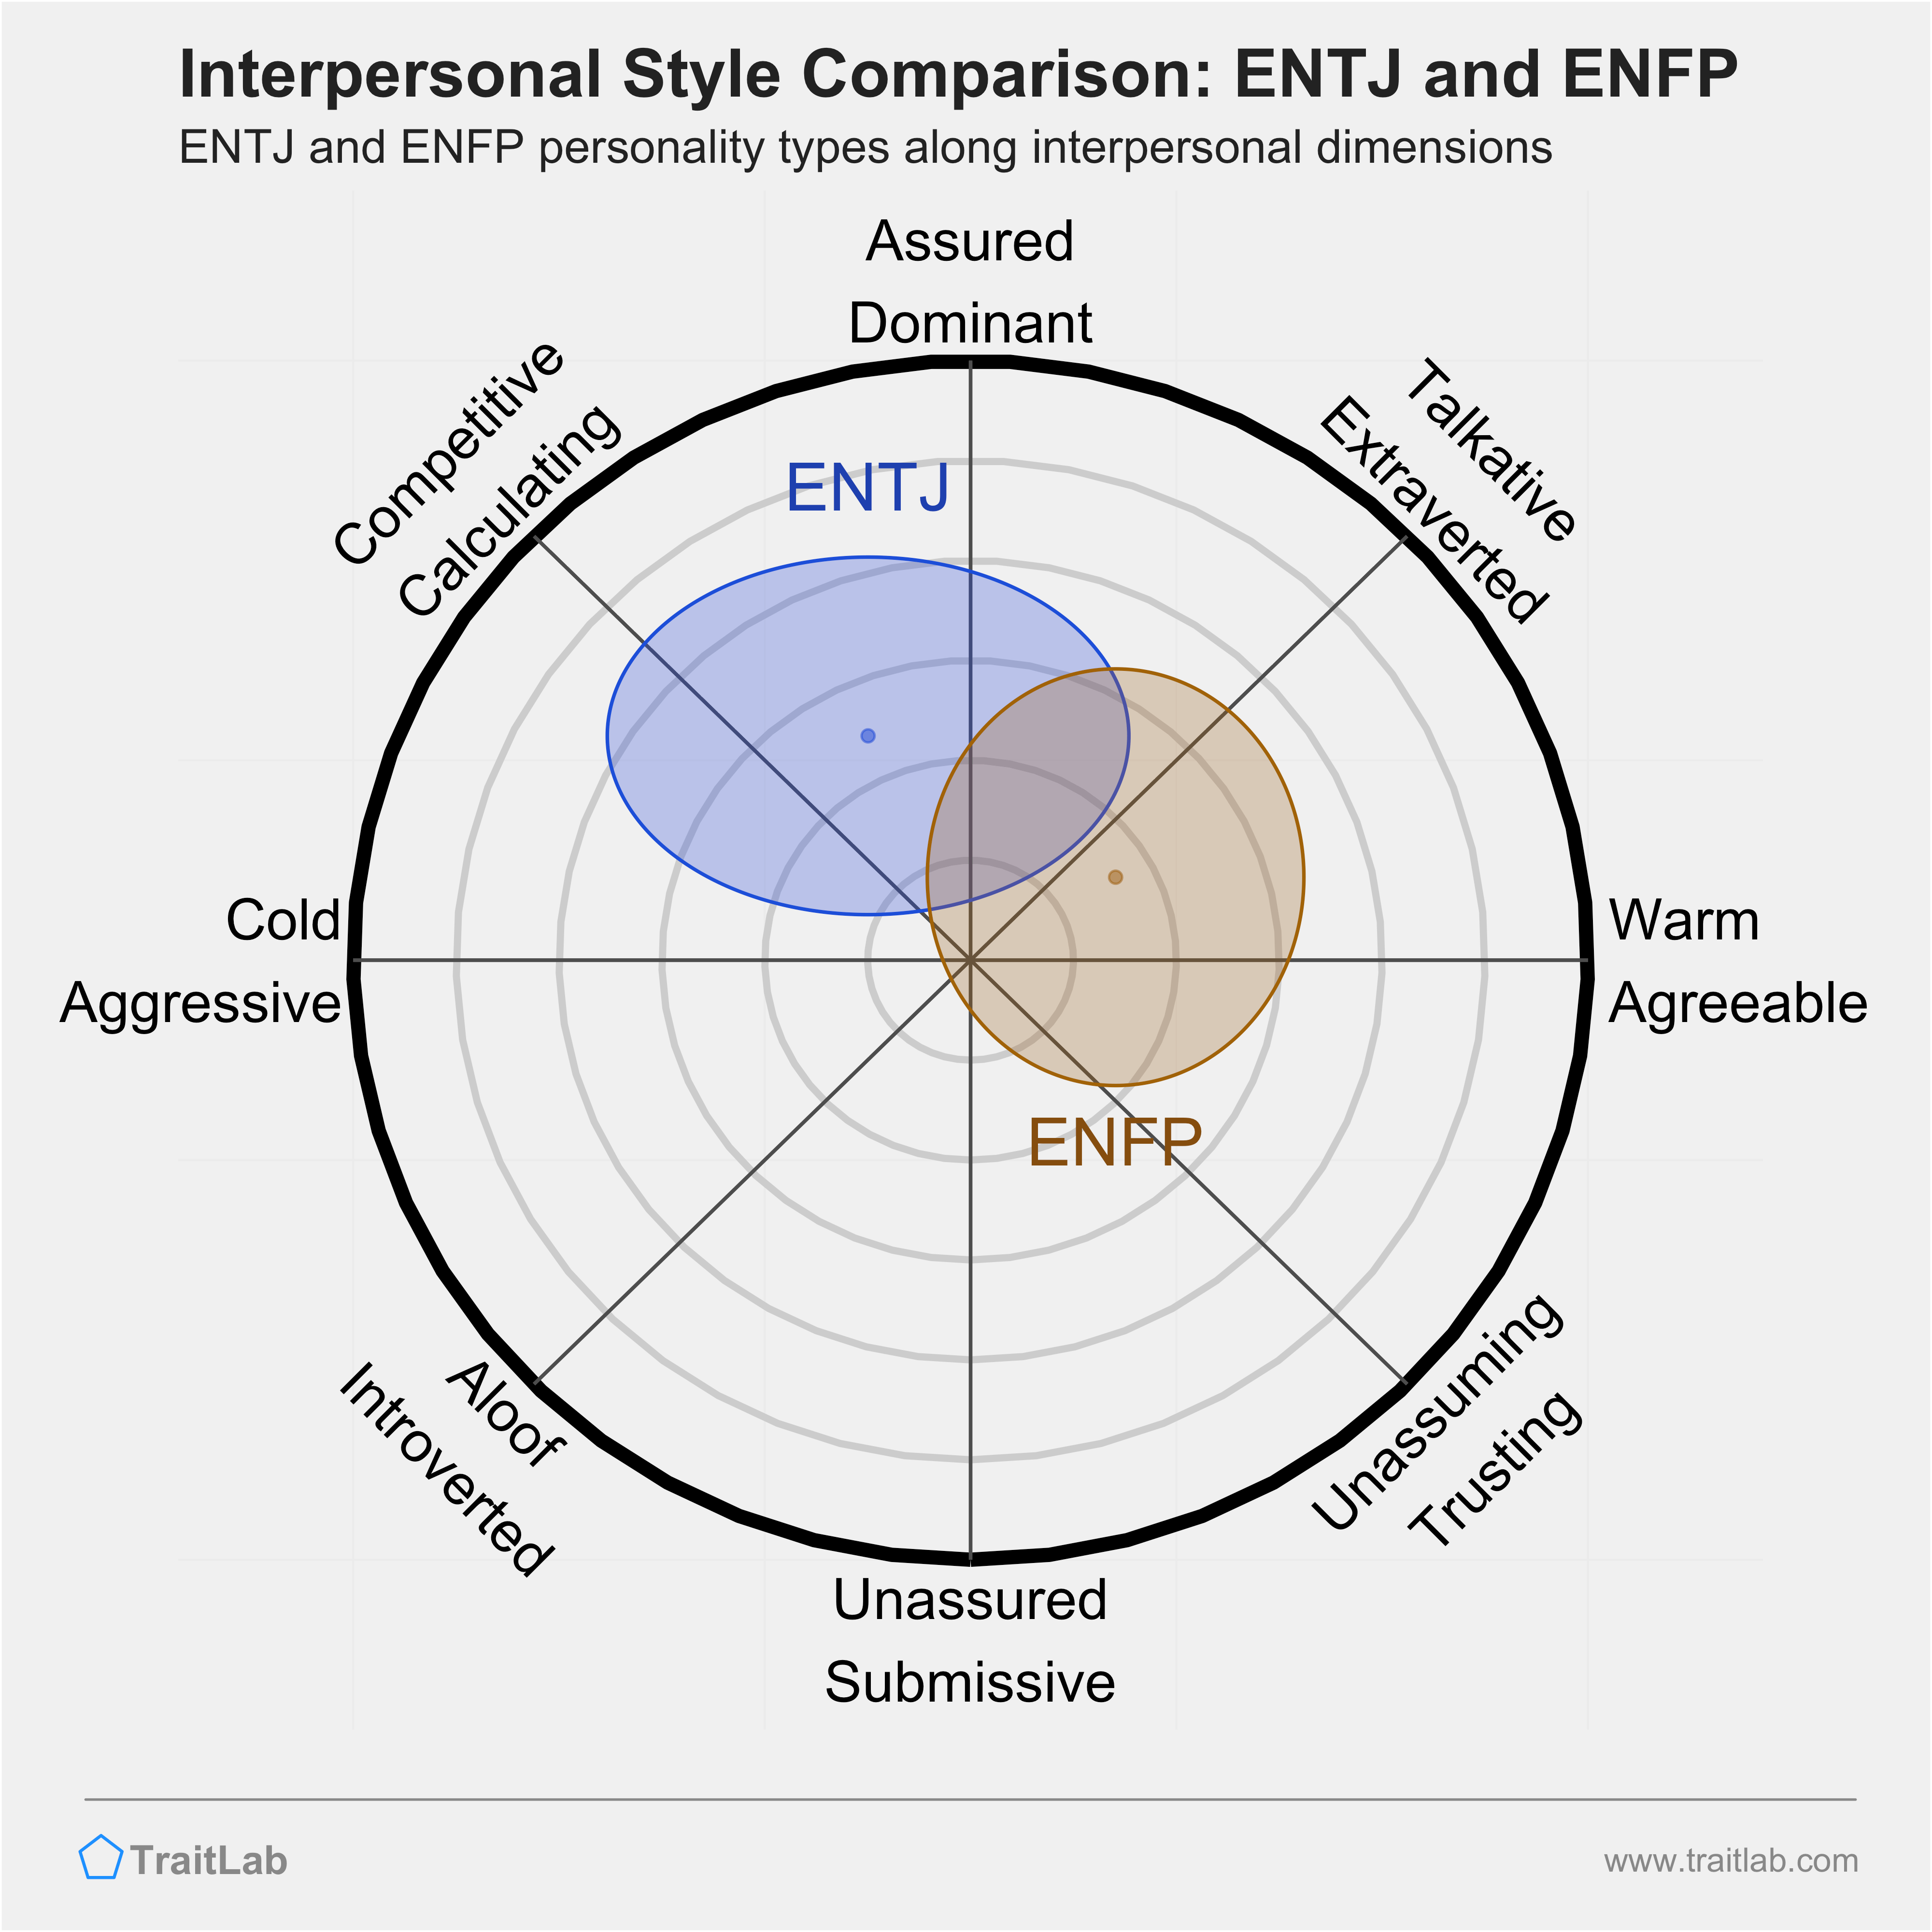 ENTJ and ENFP comparison across interpersonal dimensions